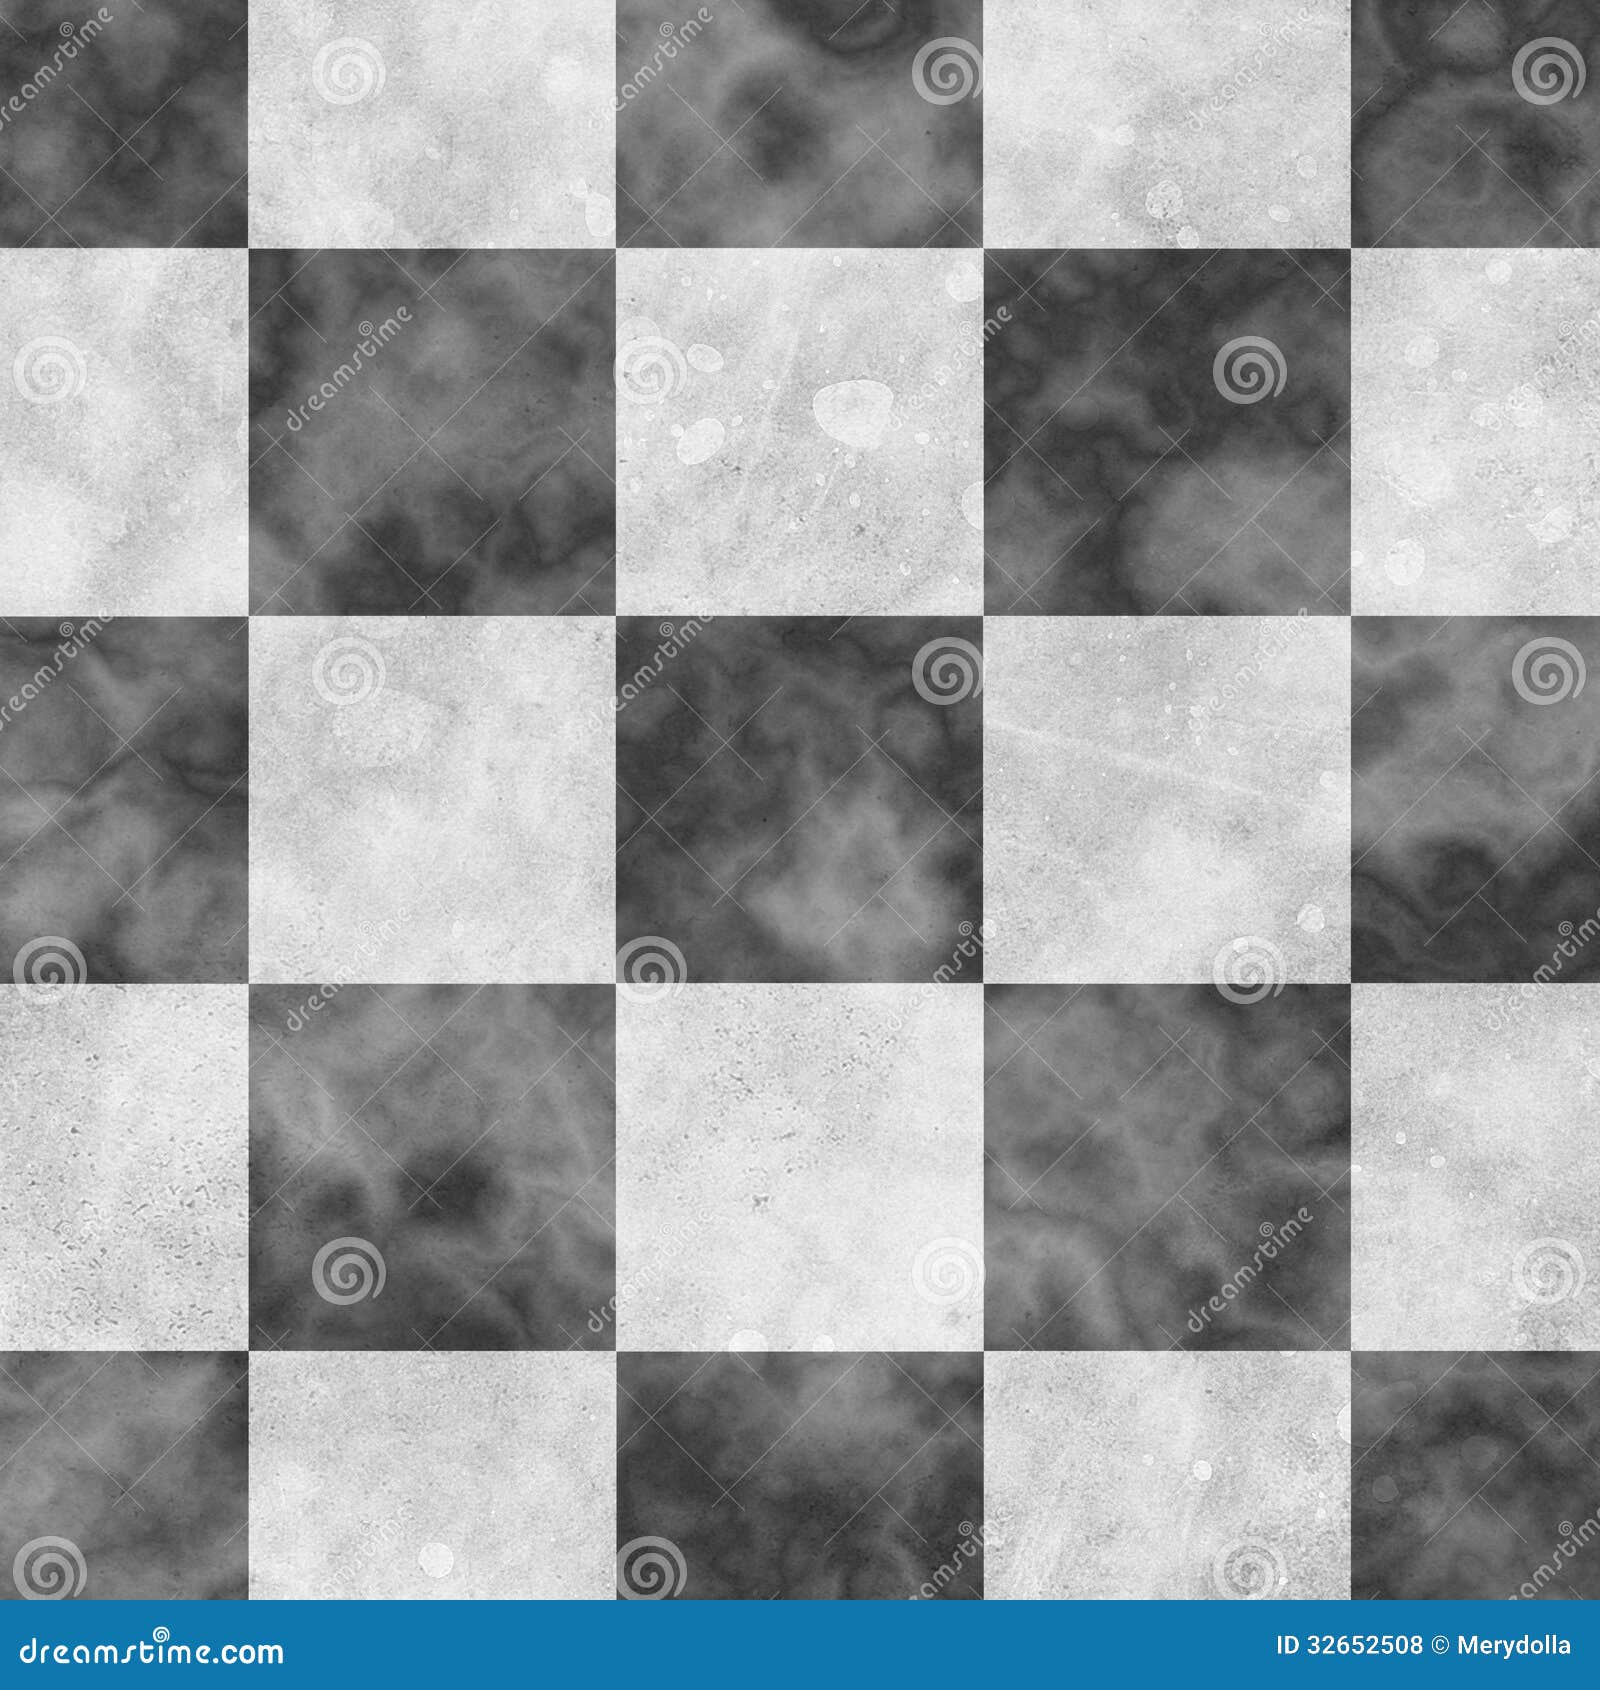 Grunge chess board stock photo. Image of board 